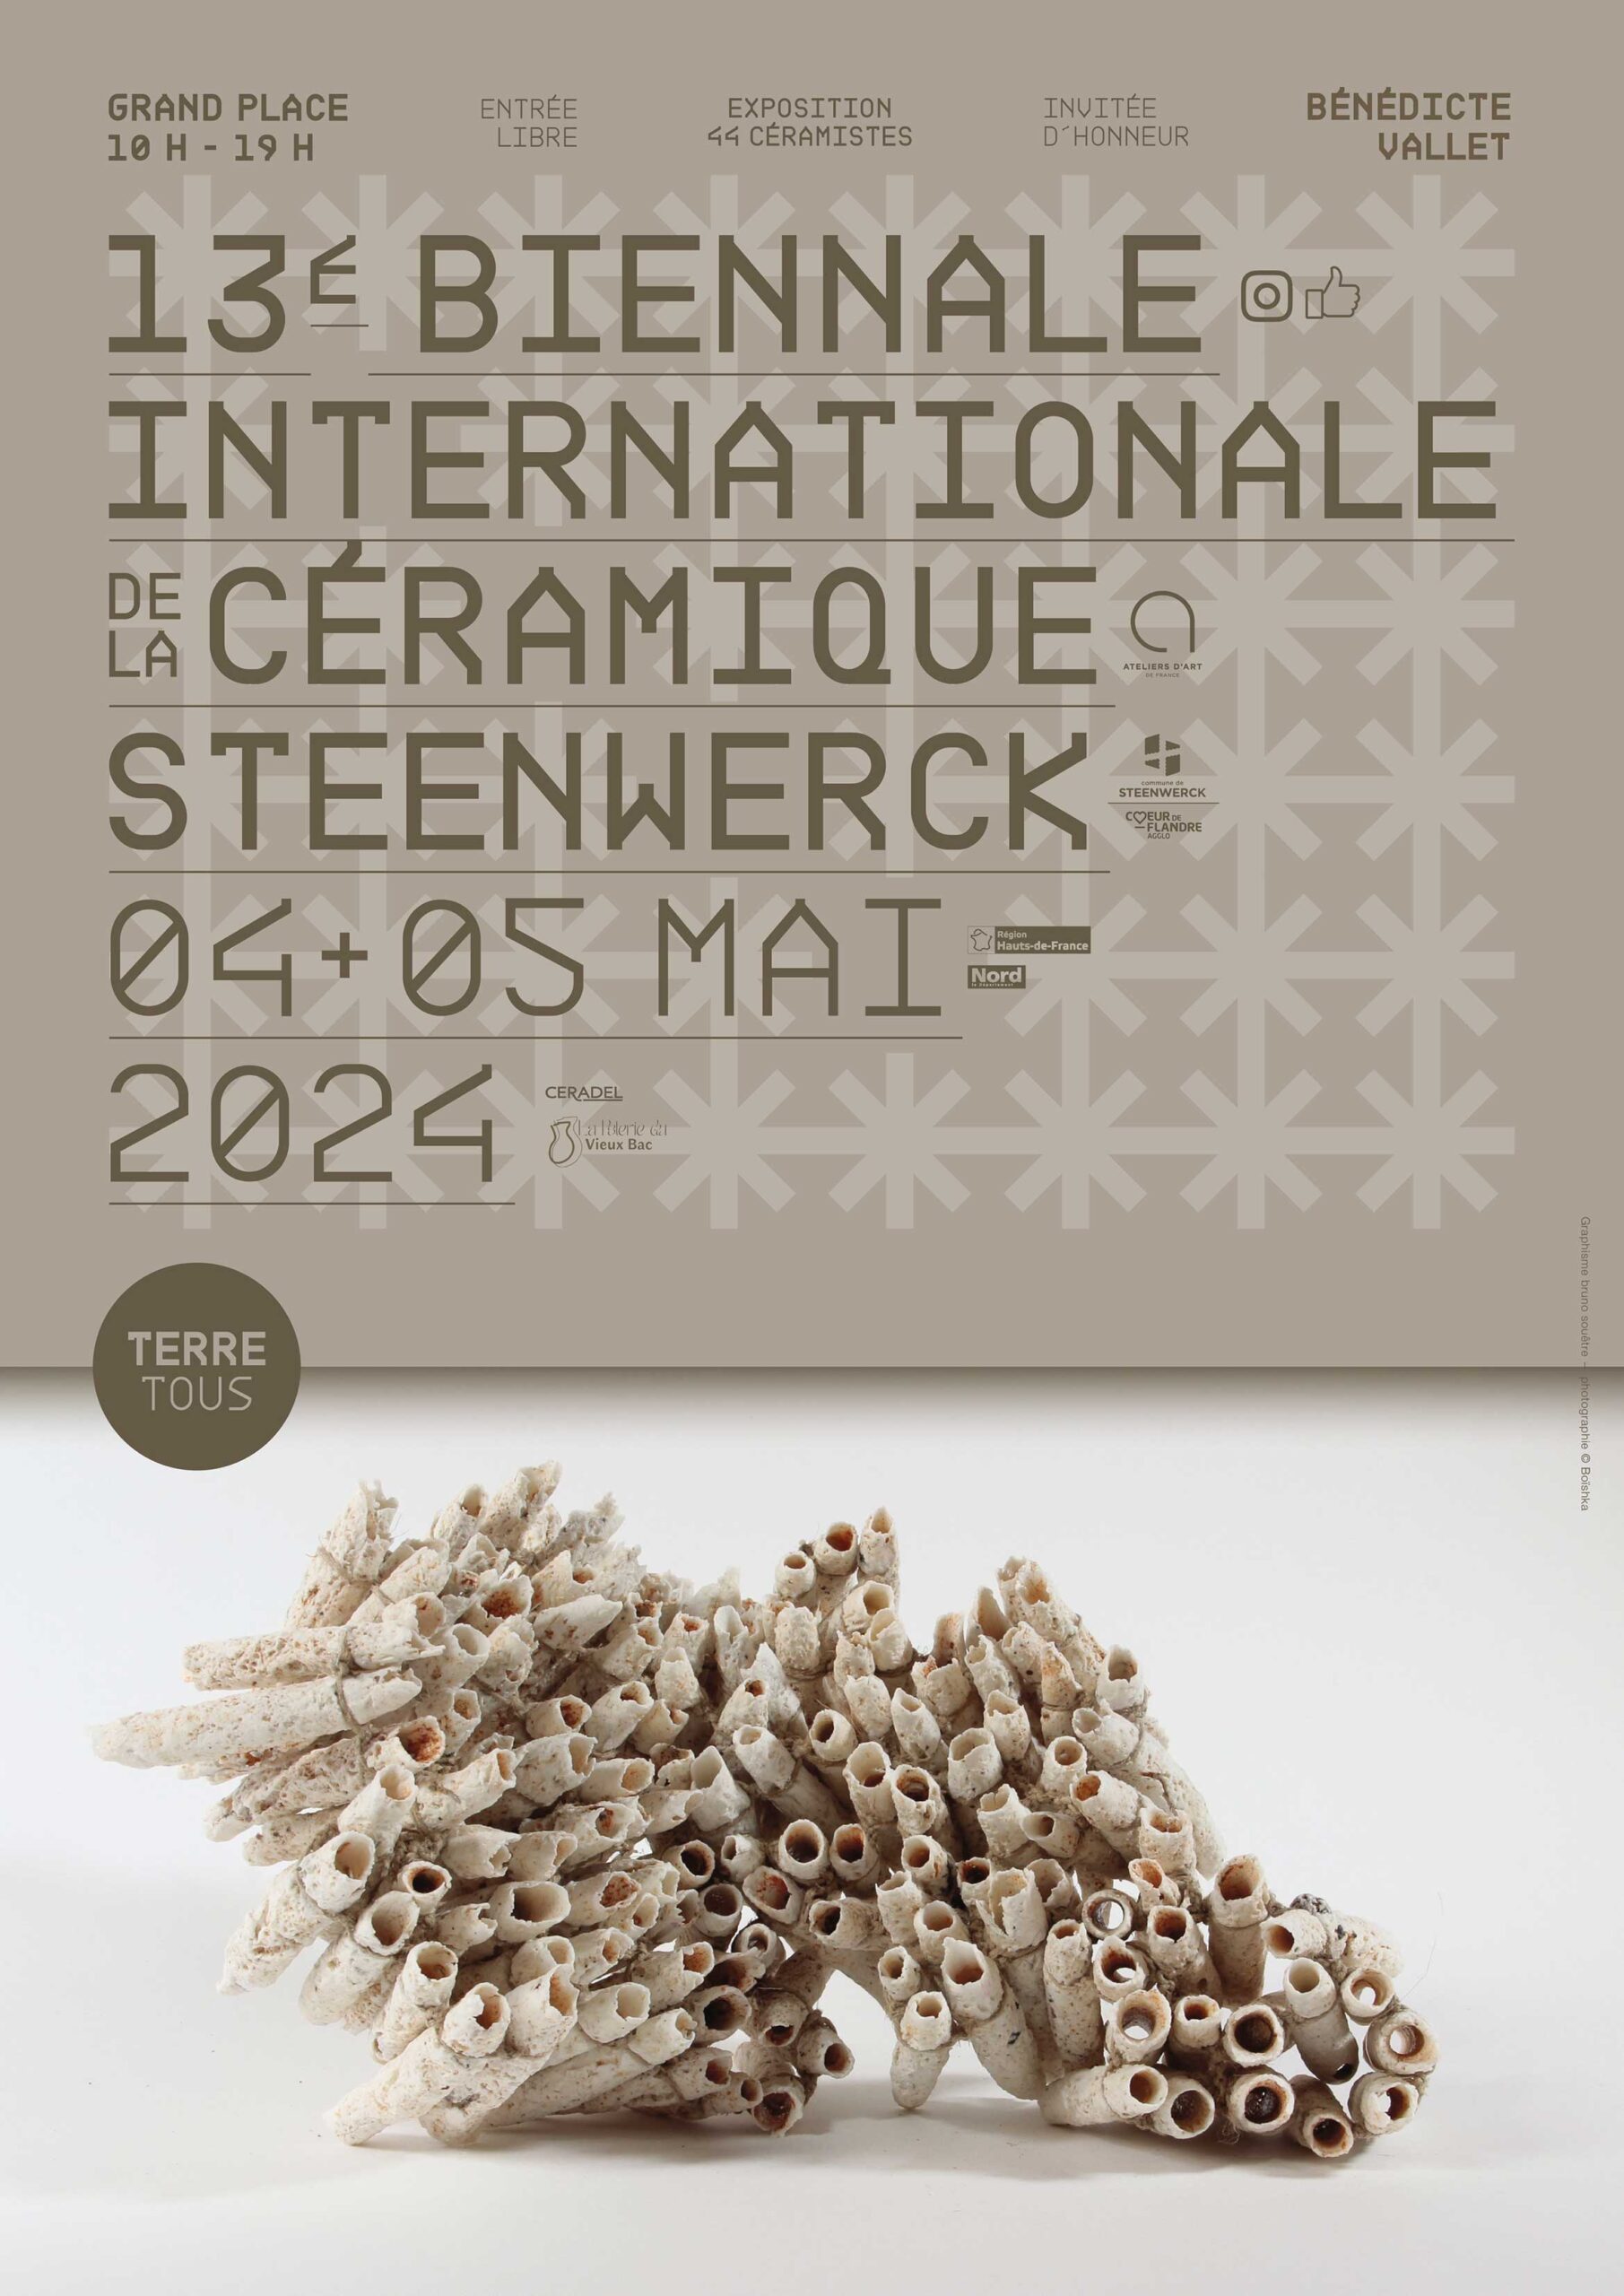 Biennale Internationale de Céramique de Steenwerk